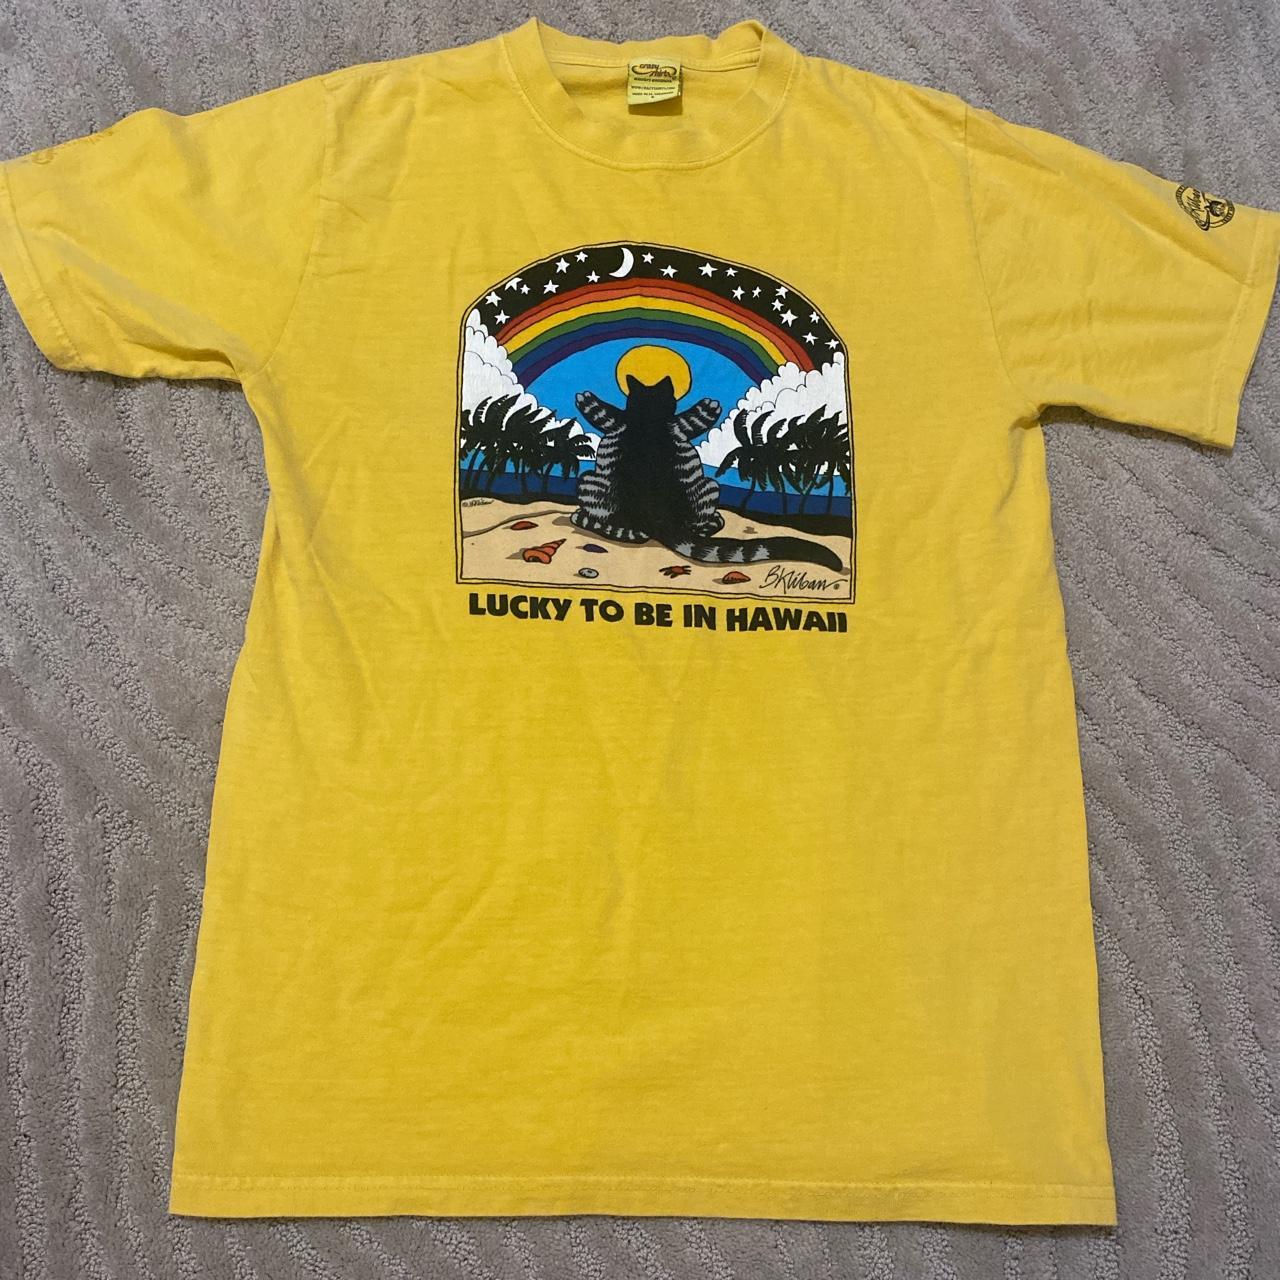 Crazy Shirts Men's Yellow T-shirt | Depop